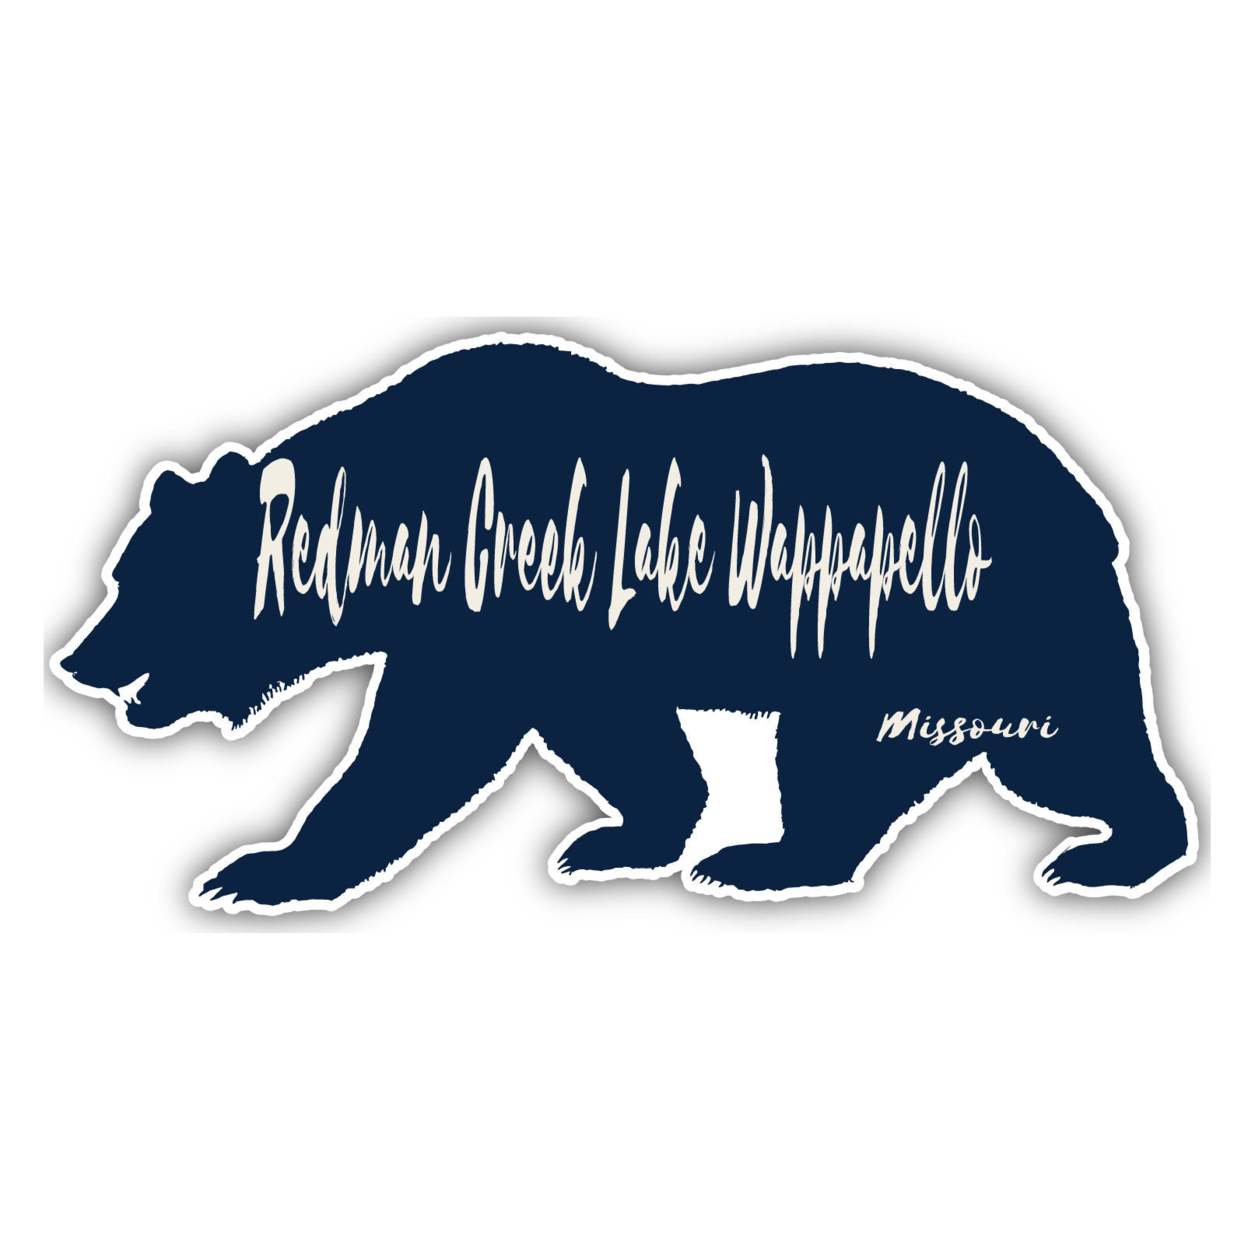 Redman Creek Lake Wappapello Missouri Souvenir Decorative Stickers (Choose Theme And Size) - Single Unit, 4-Inch, Bear